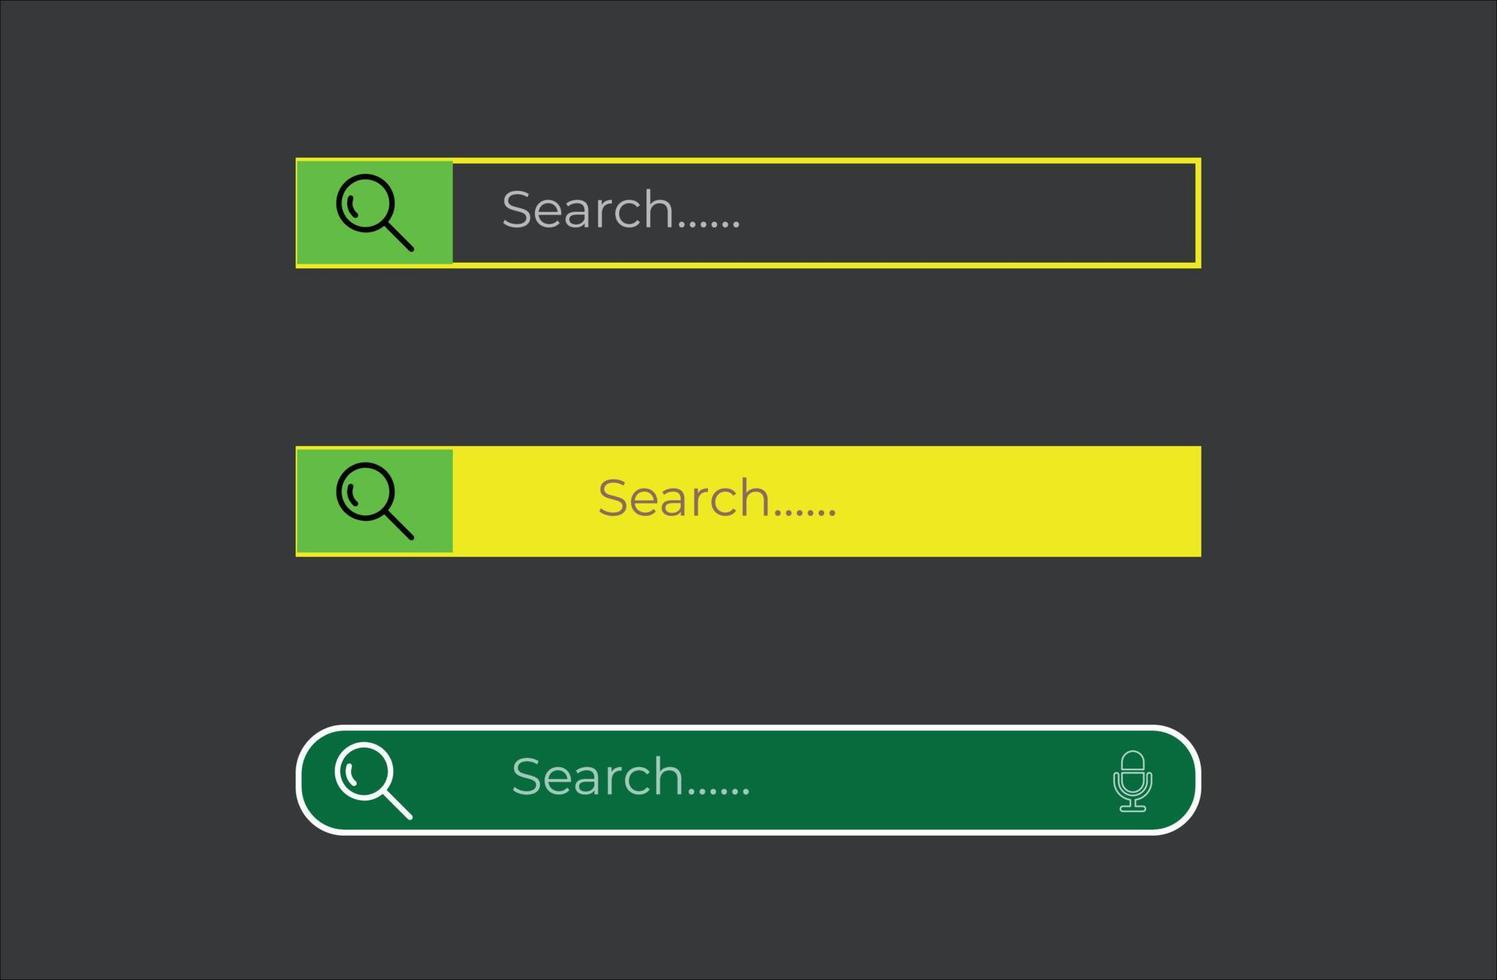 Search Bar Templates design or search icon design vector